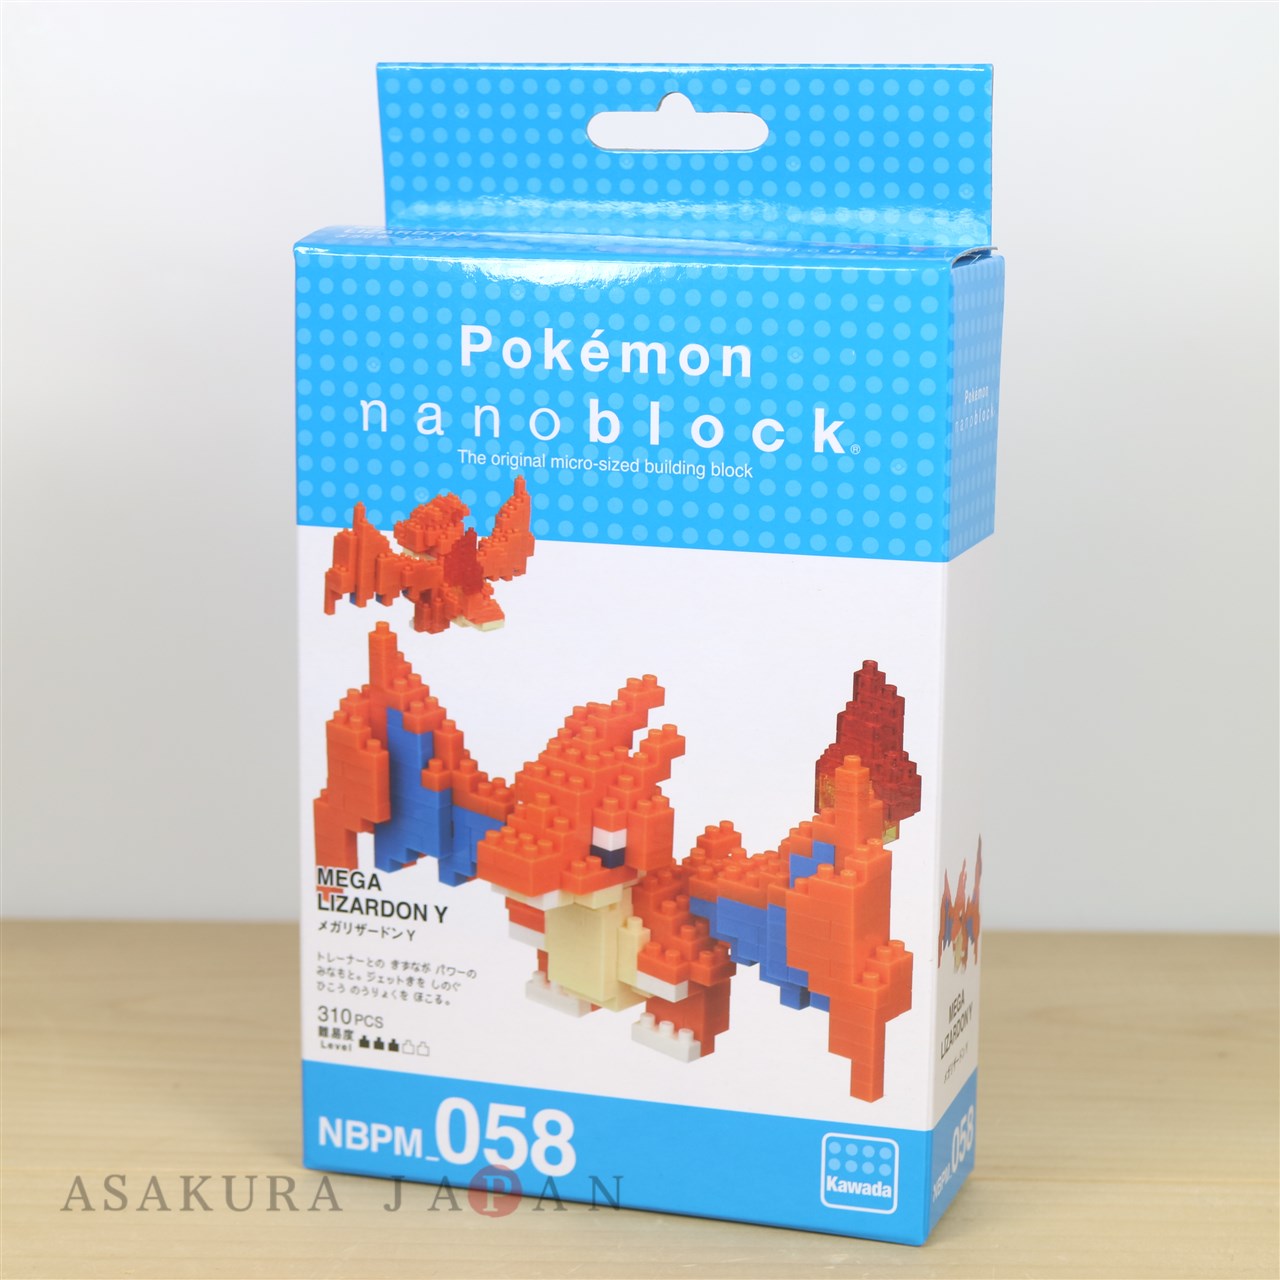 Details about   Pokemon KAWADA nanoblock NBPM_008 Charizard micro-sized building block